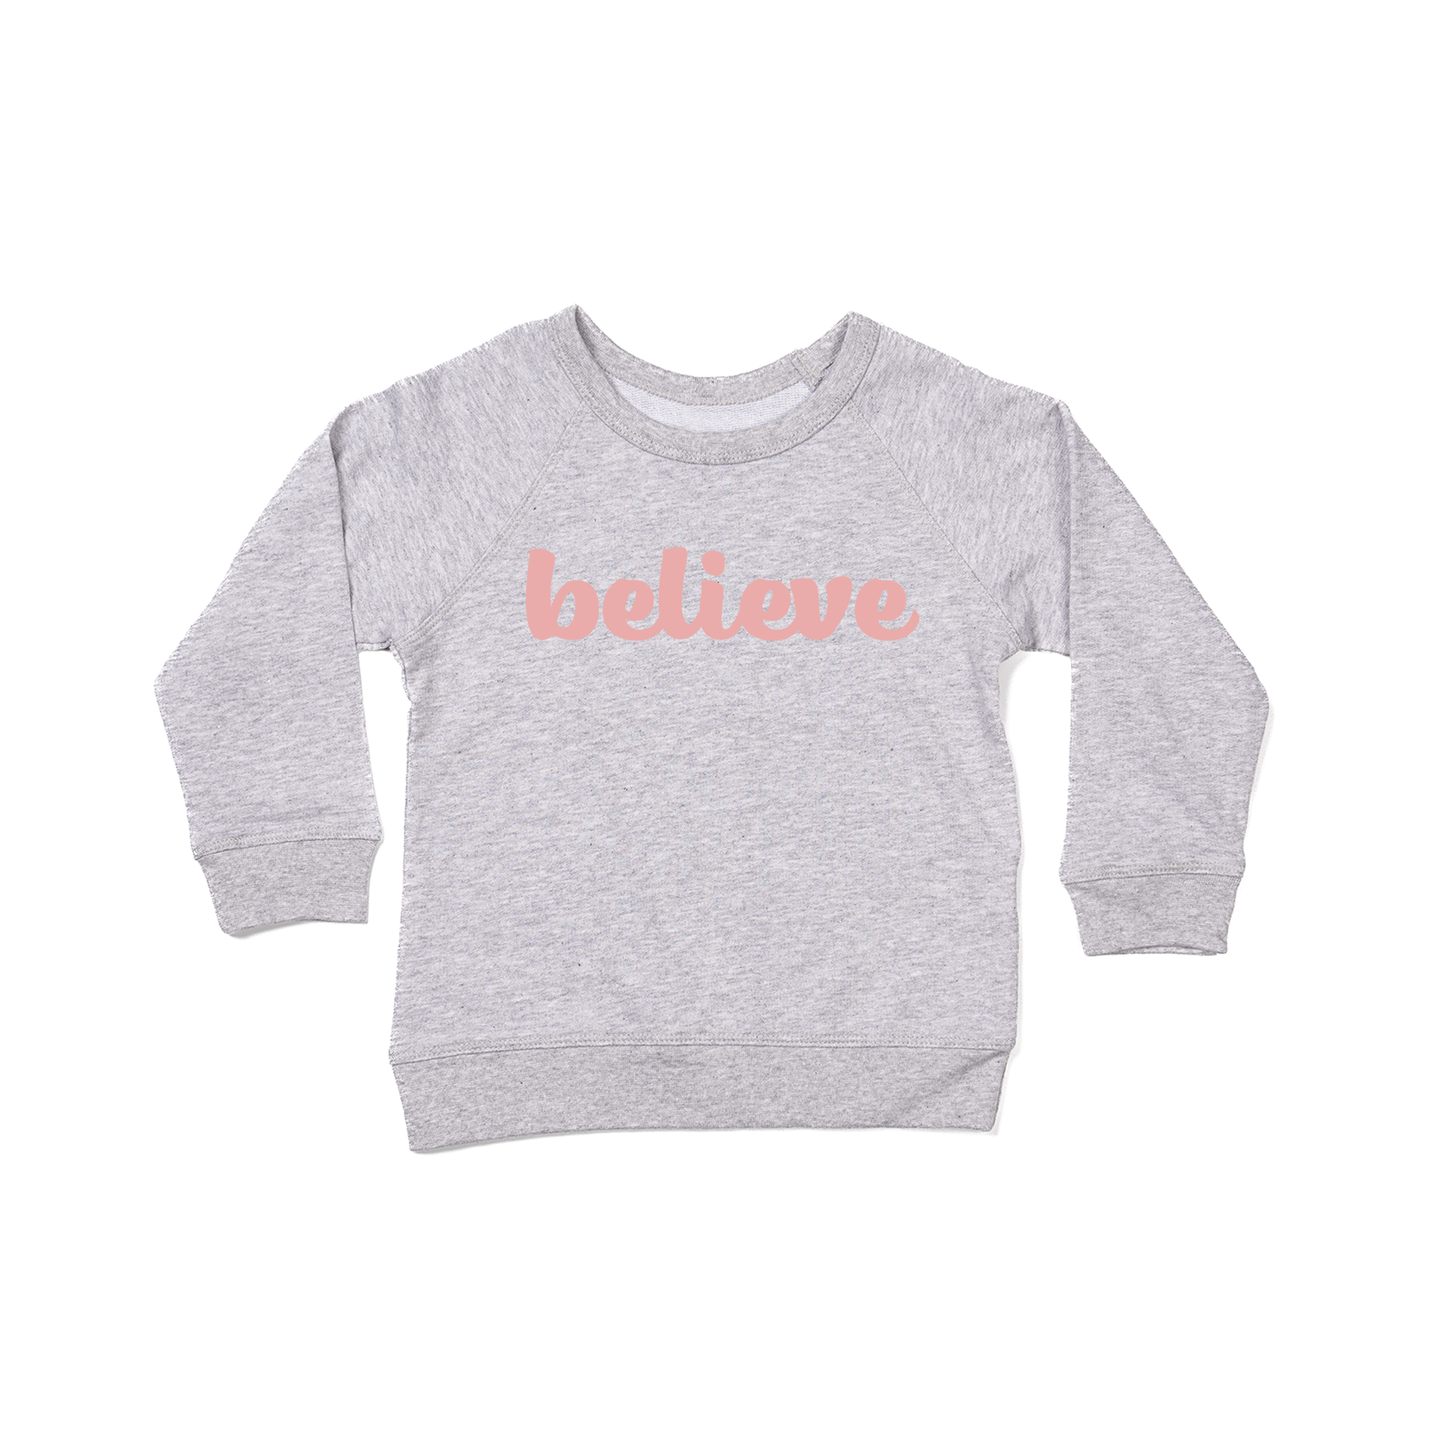 Believe (Thick Cursive, Pink) - Kids Sweatshirt (Heather Gray)